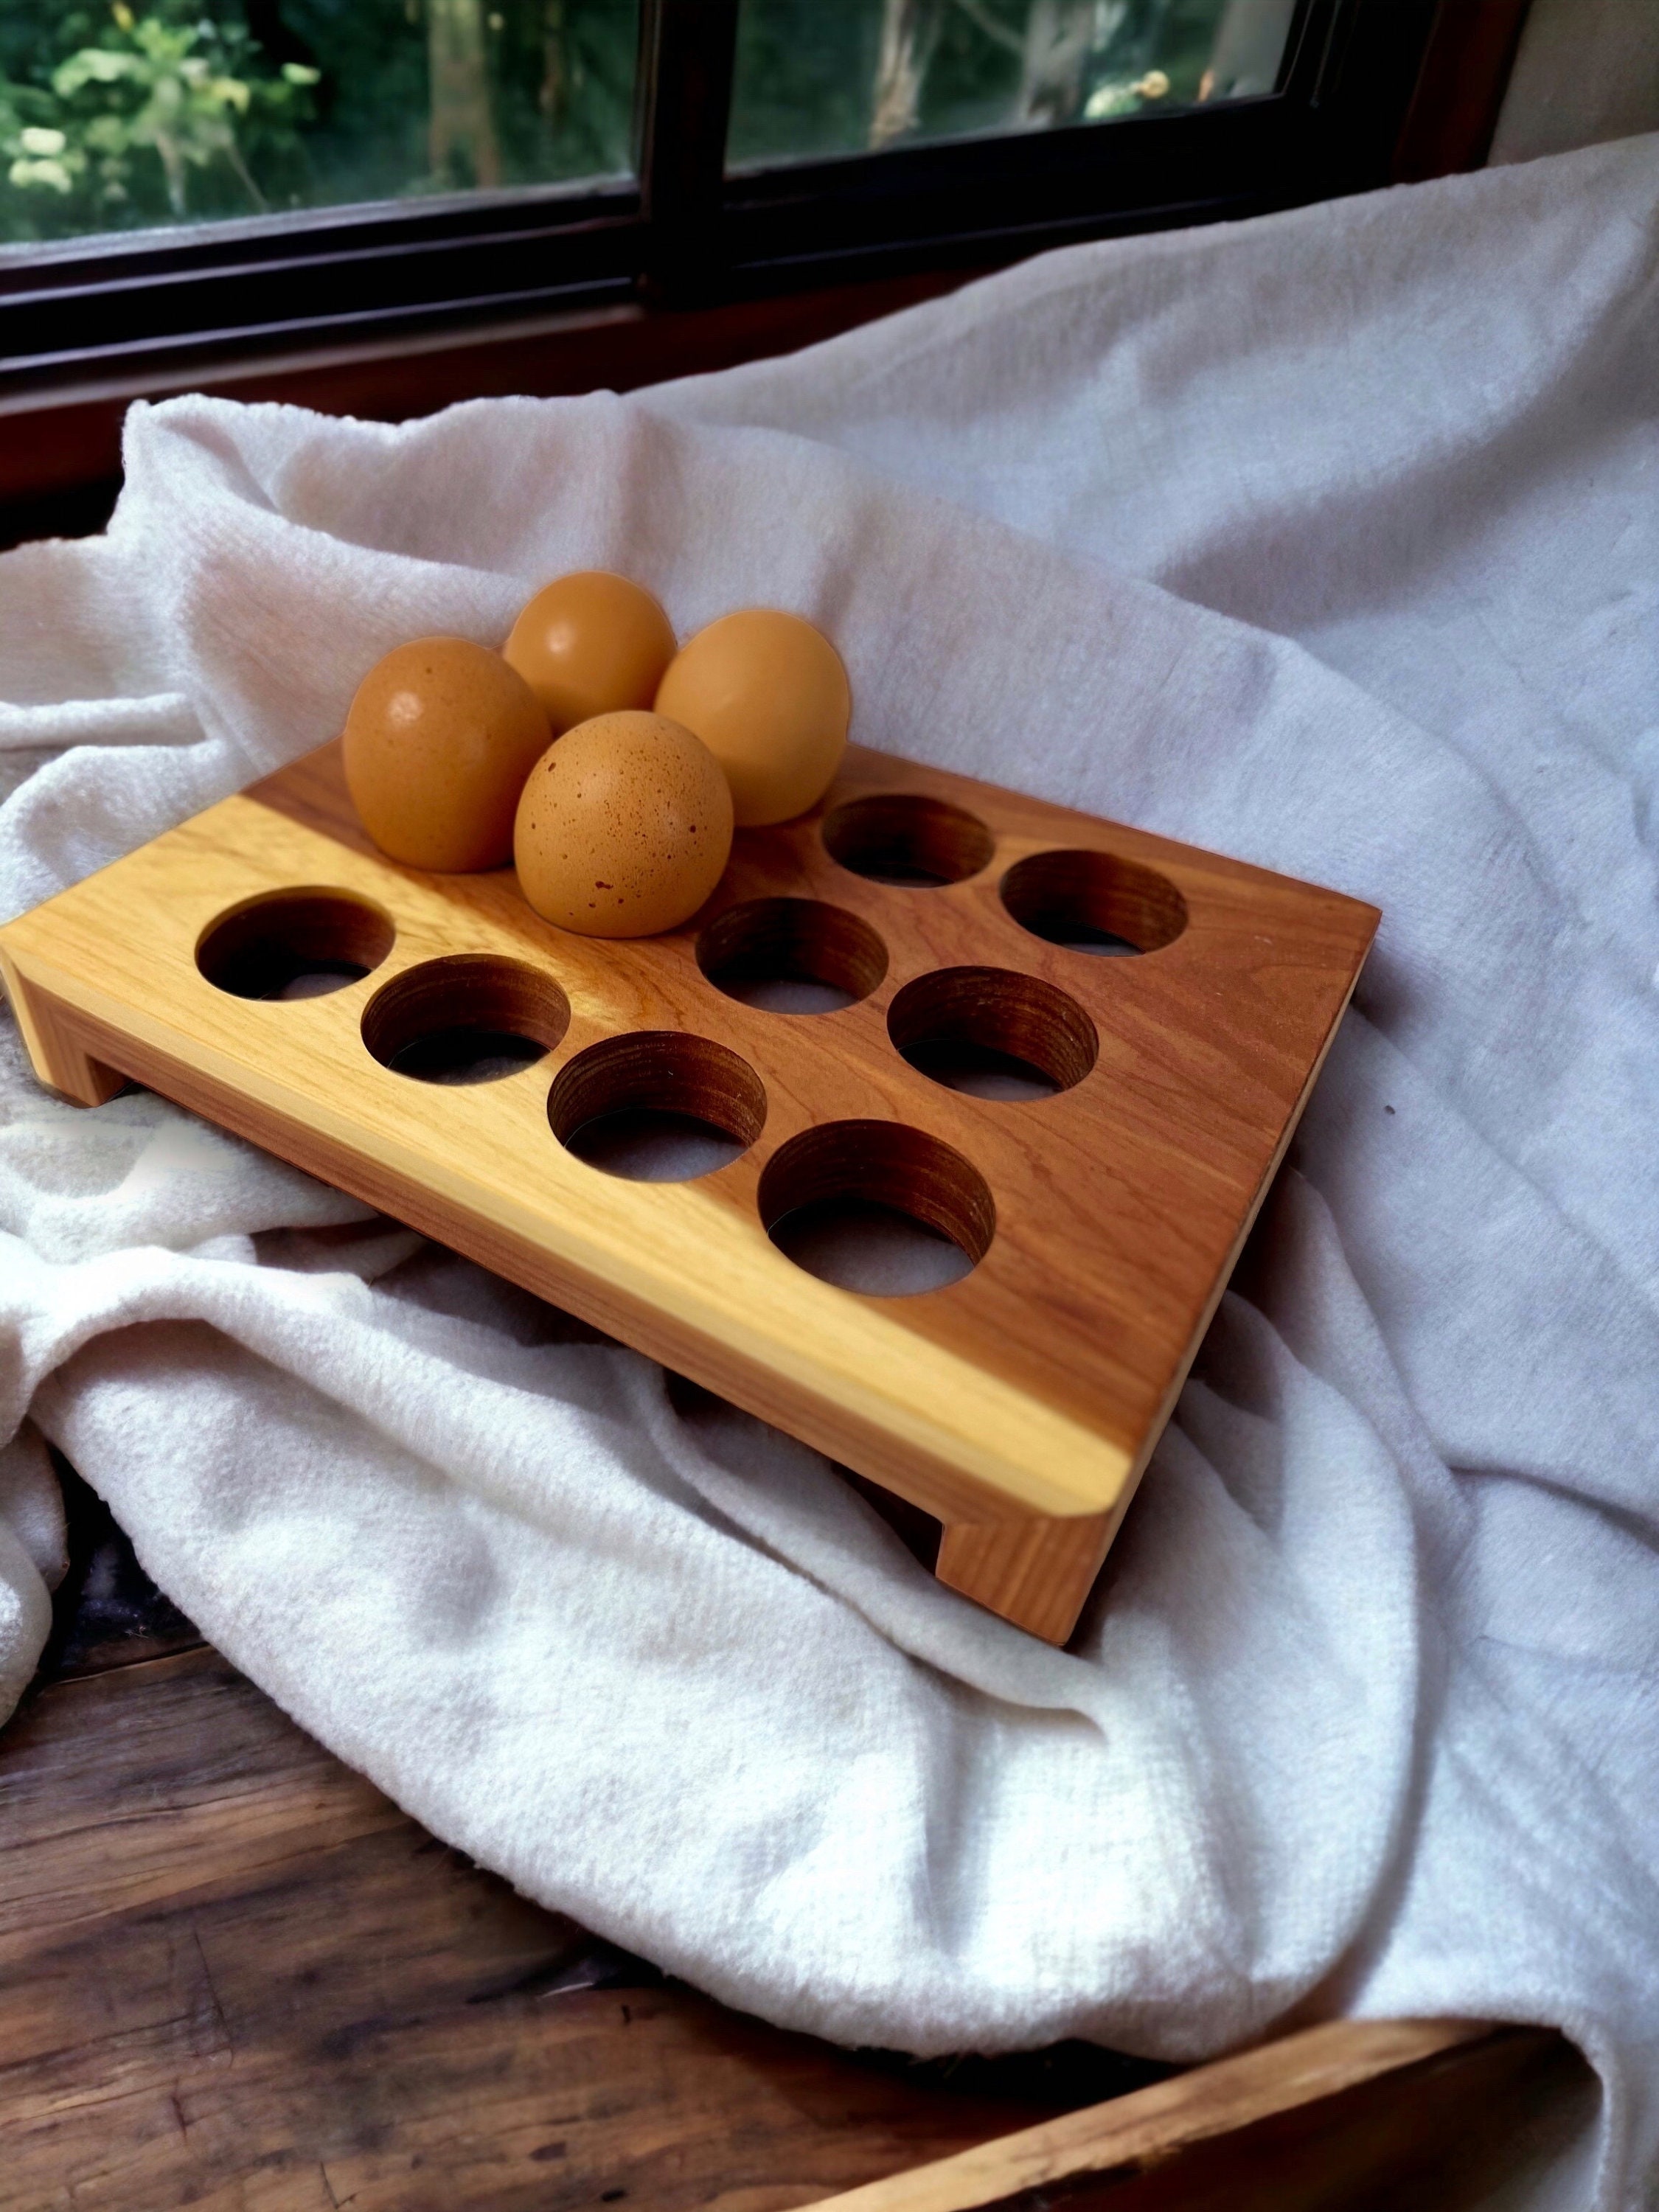 Henlay Decorative Egg Storage Tray: Wooden Egg Holder for Refrigerator - My  Pet Chicken